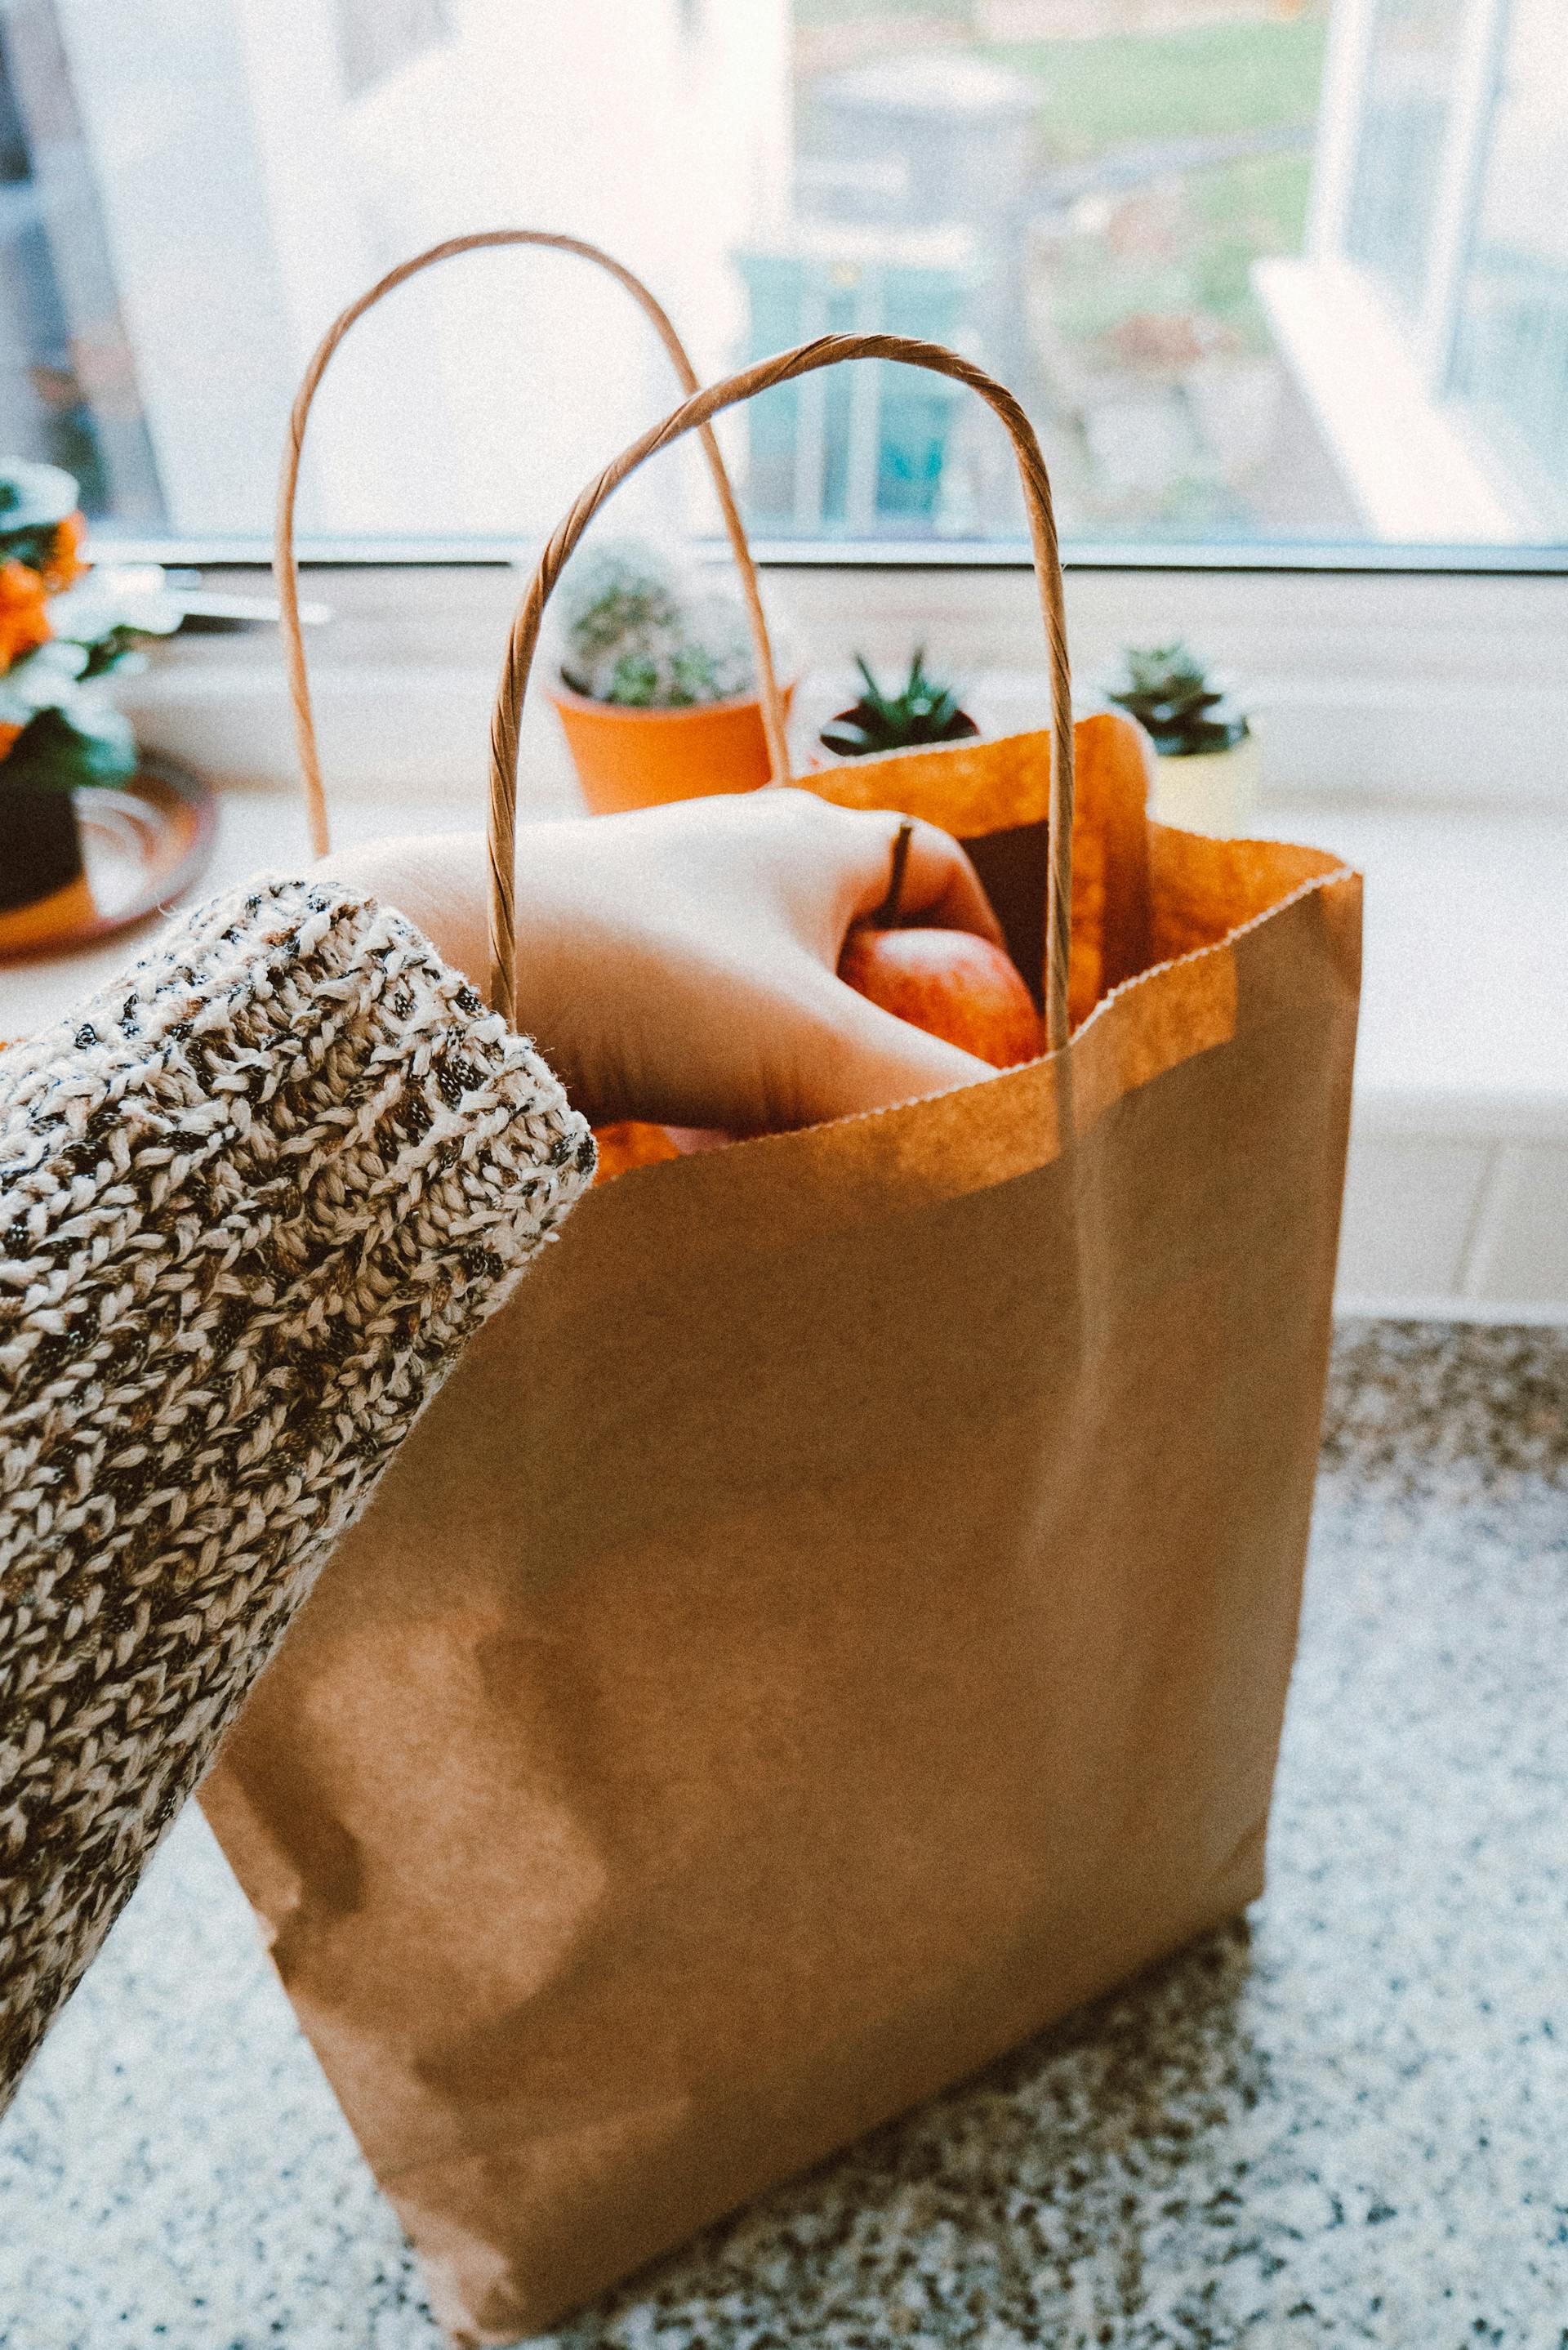 A brown paper bag of groceries | Source: Pexels